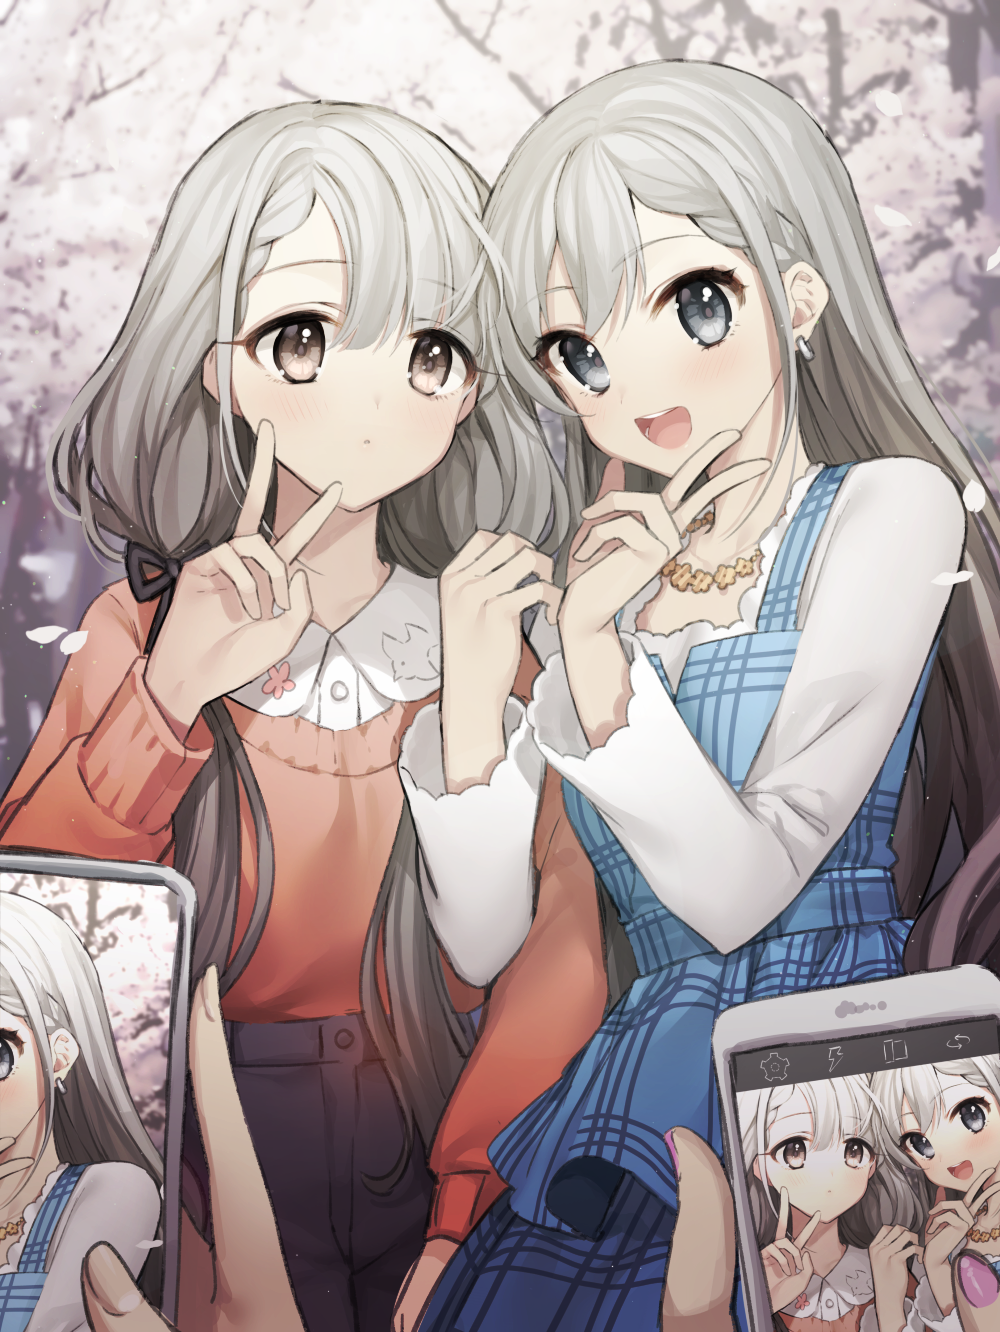 Anime 1000x1332 anime anime girls THE iDOLM@STER THE iDOLM@STER: Cinderella Girls Hisakawa Hayate Hisakawa Nagi long hair gray hair twins two women artwork digital art fan art